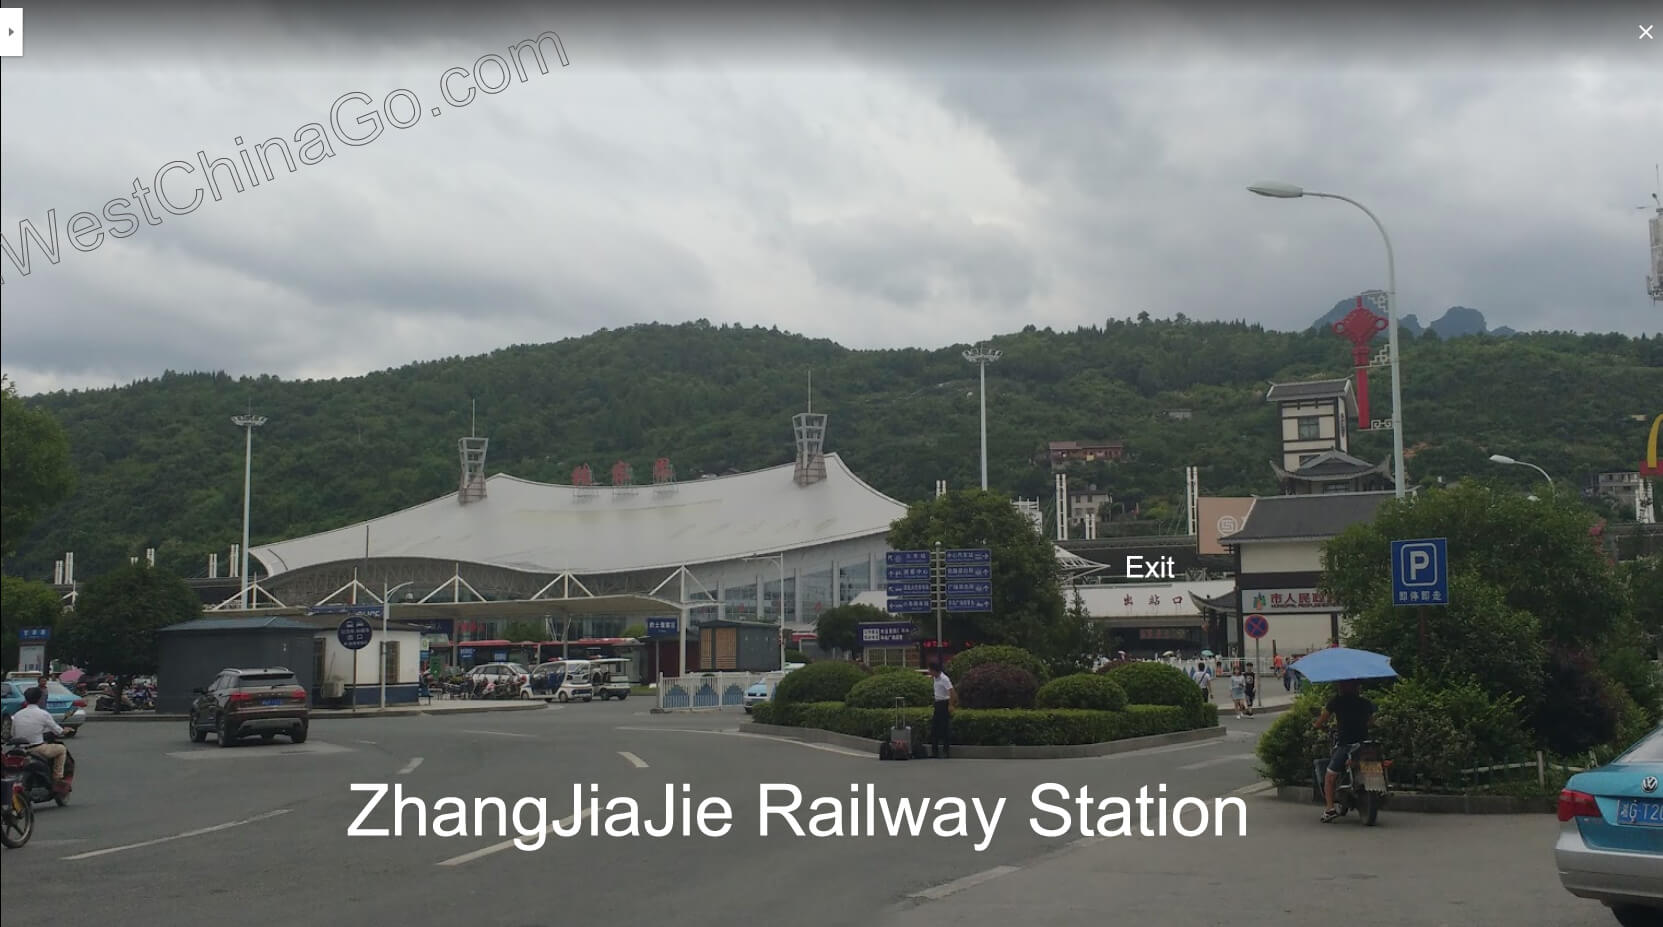 zhangjiajie railway station